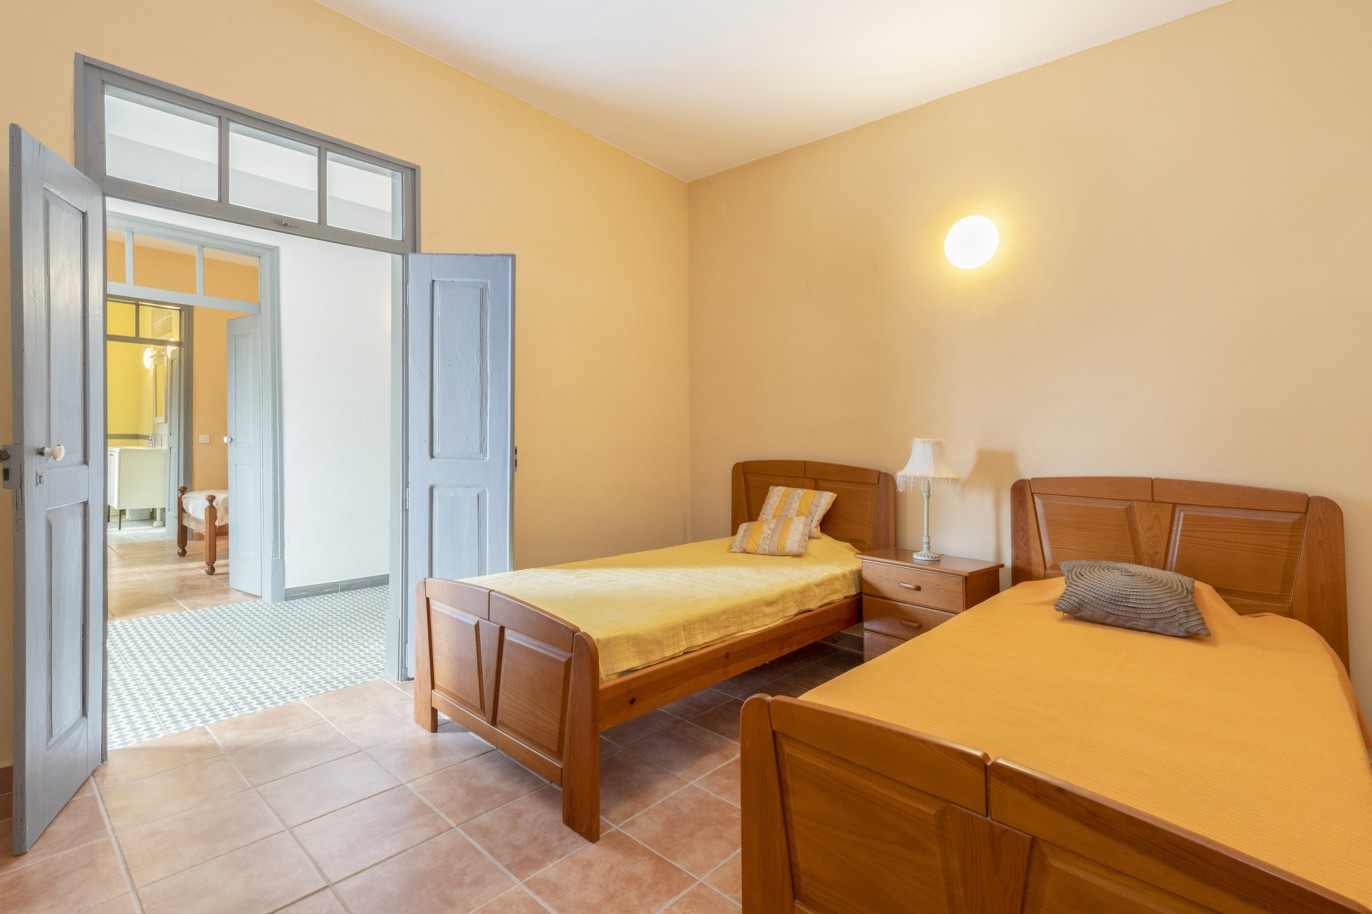 Renovated 3 bedroom villa for sale in São Bartolomeu de Messines, Algarve _218625